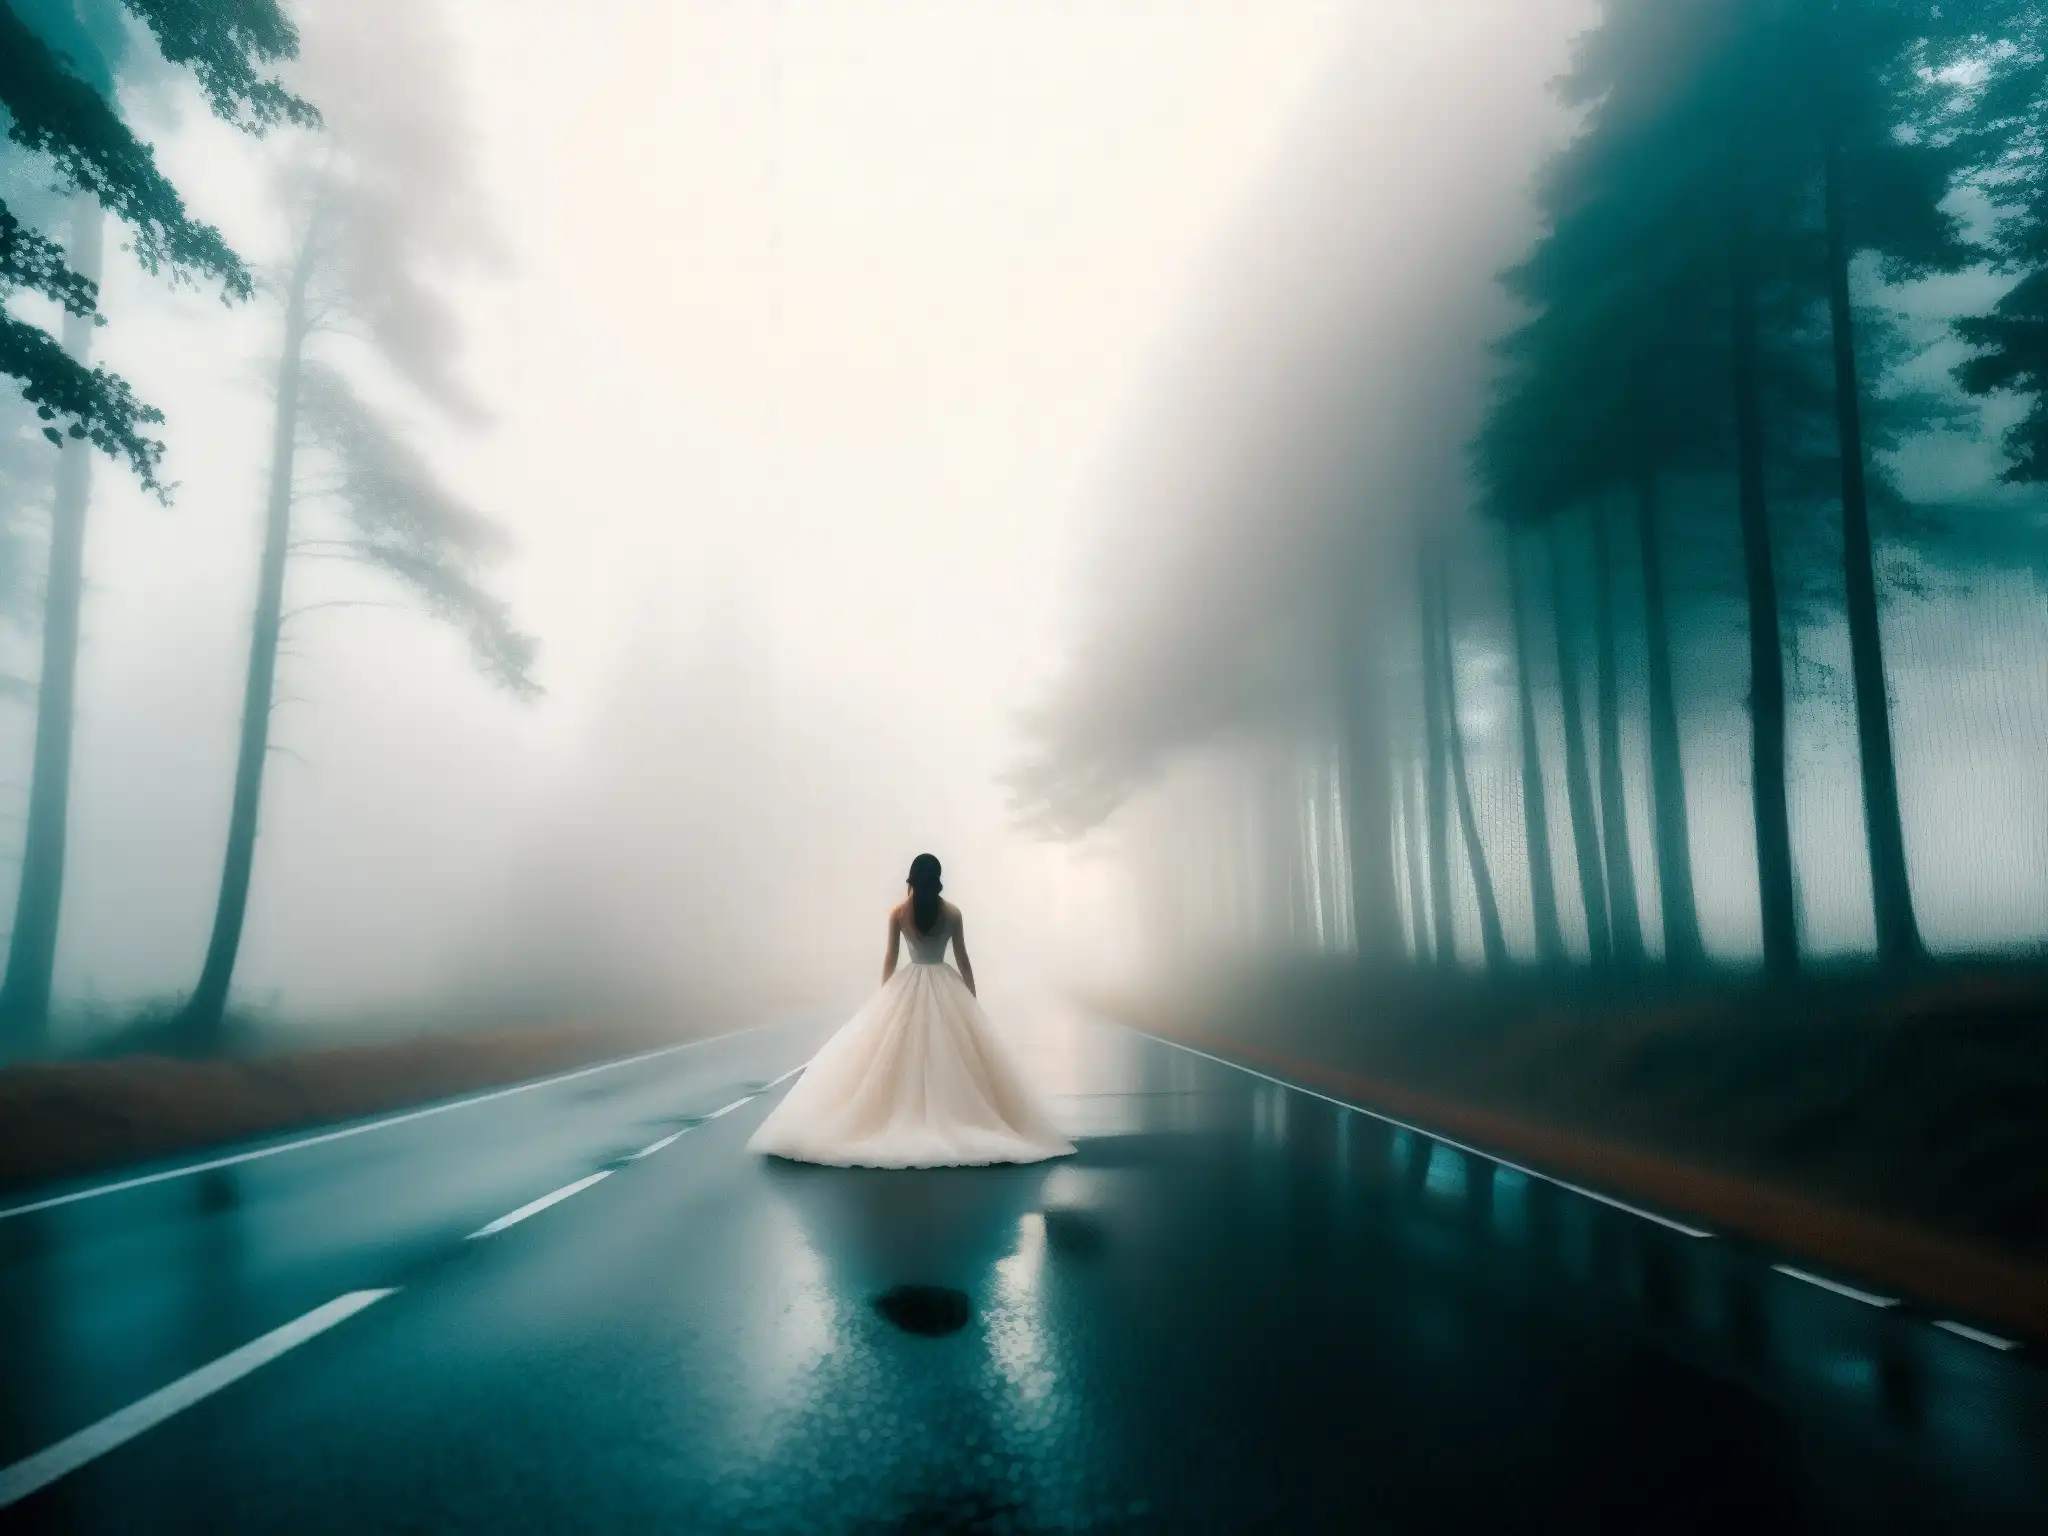 Espíritu de la Novia Carretera PuneMumbai: misteriosa novia en la neblina, rodeada de árboles, con luz de coche al fondo